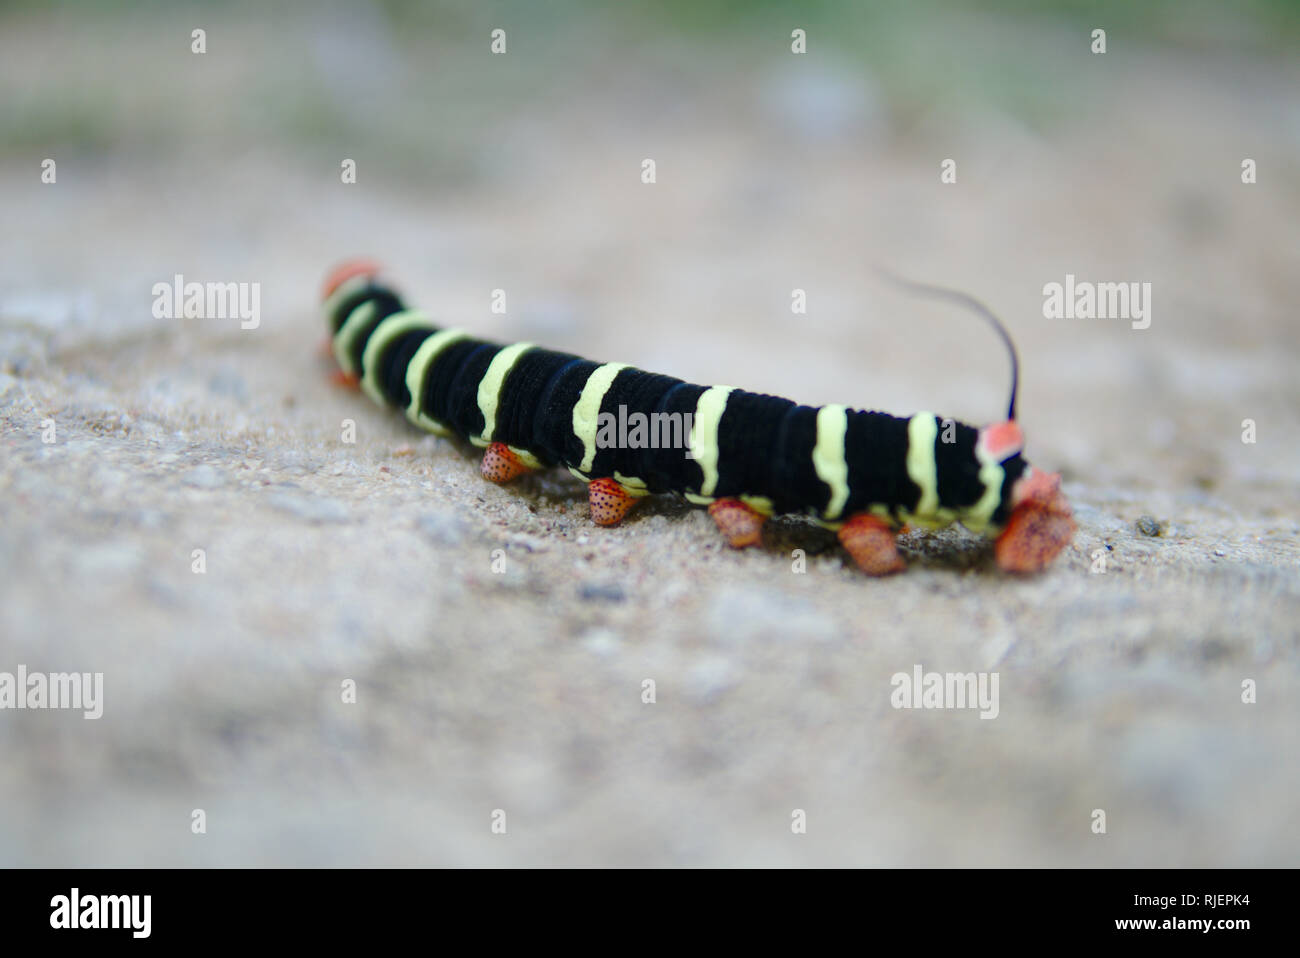 A colorful caterpillar. Stock Photo